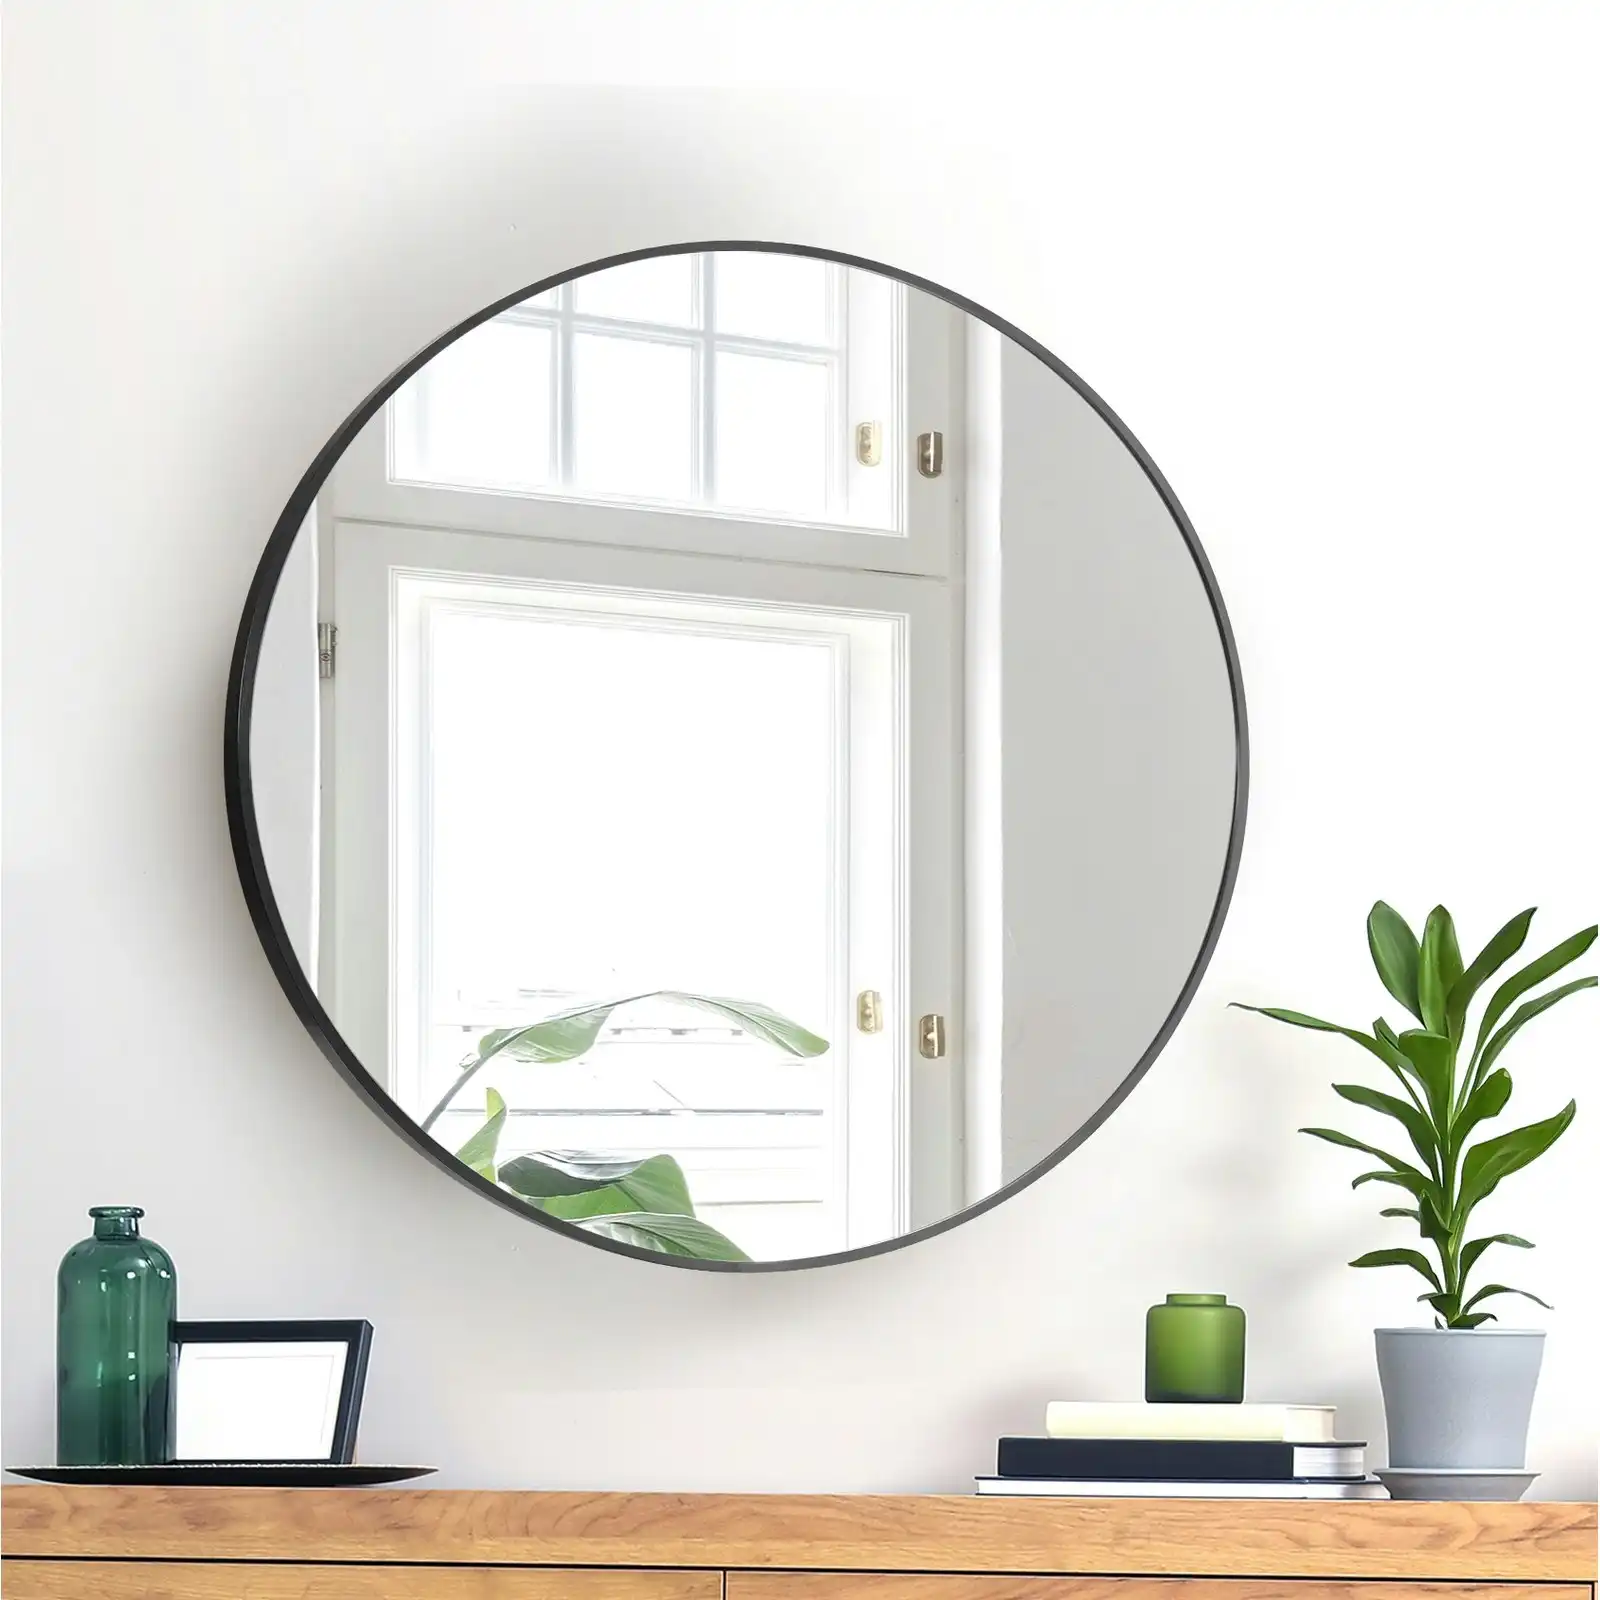 Oikiture Wall Mirrors Round Makeup Mirror Vanity Home Decro 50cm Black Bedroom